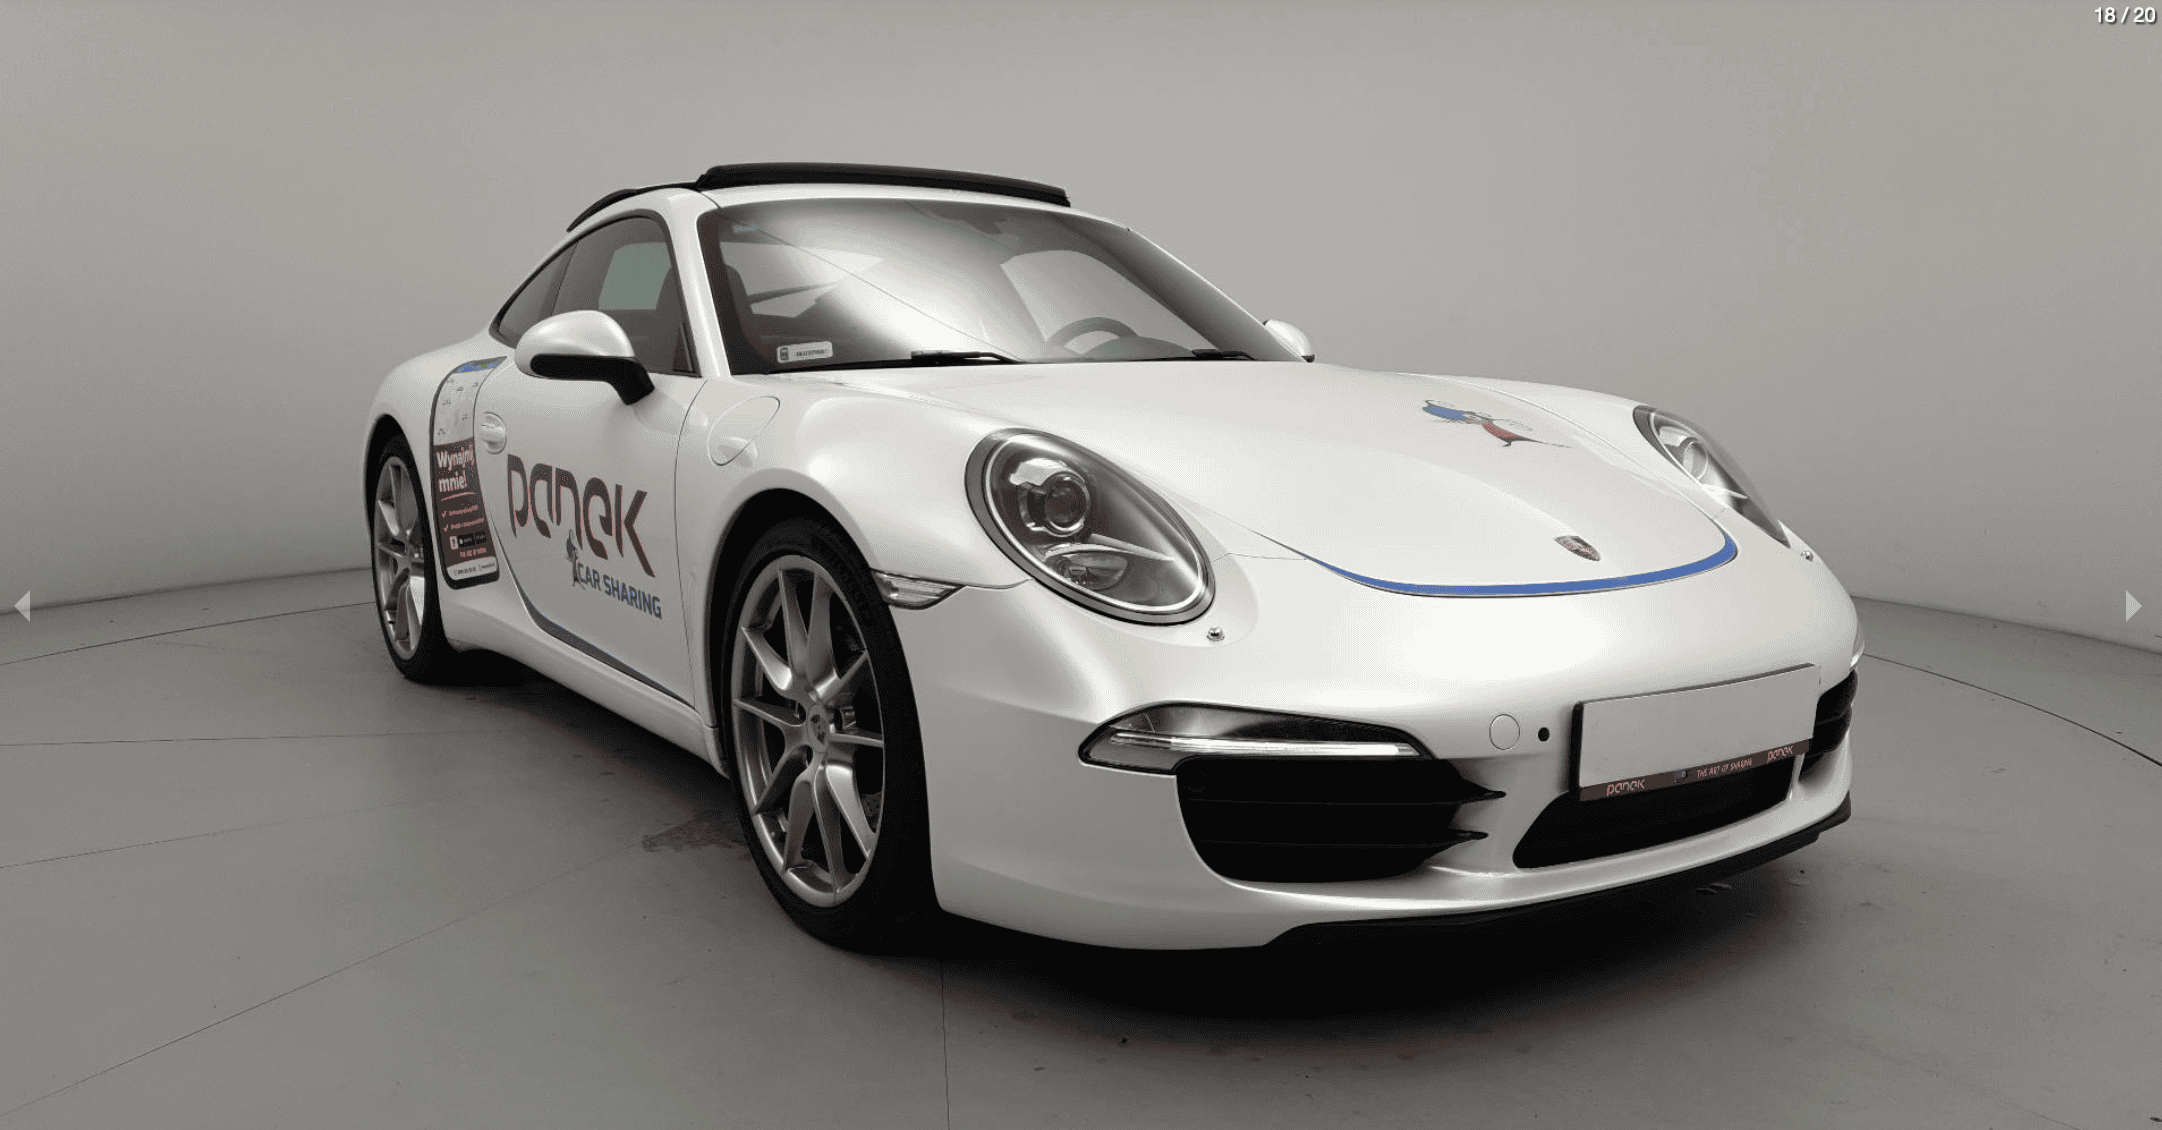 Porsche 911 w ofercie Panek CarSharing